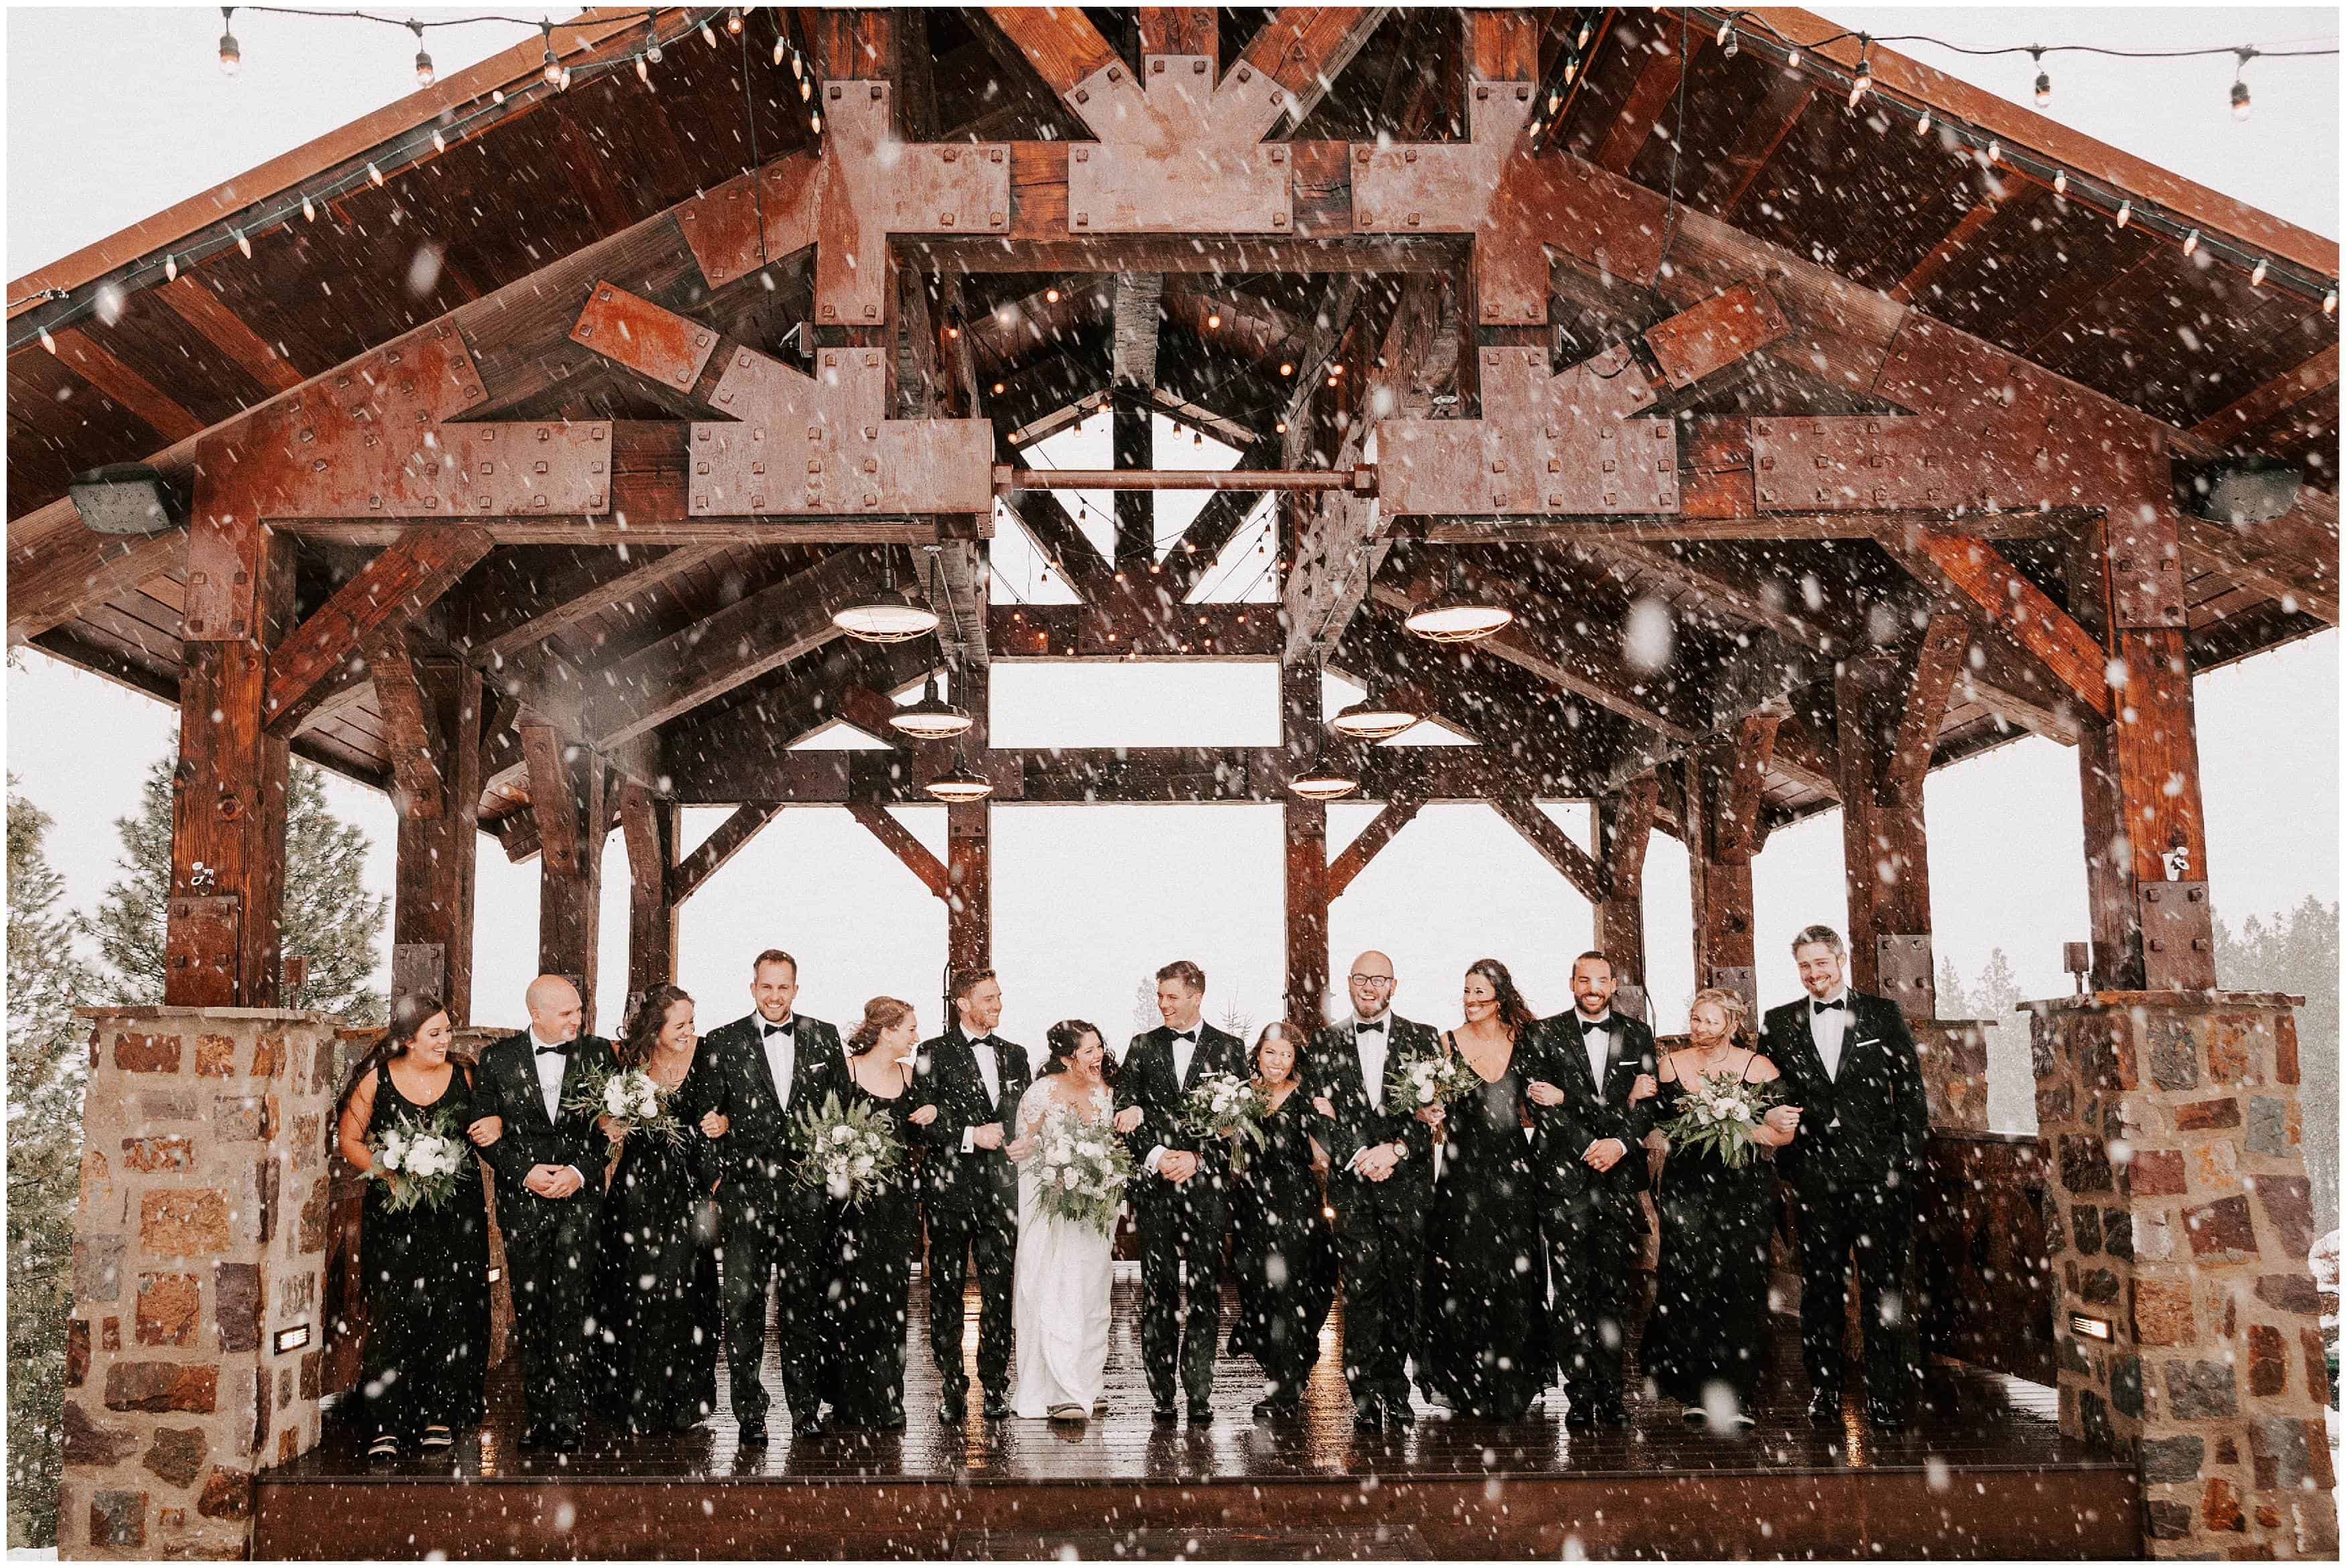 Swiftwater Cellars wedding photos in winter by Kyle Goldie of Luma Weddings